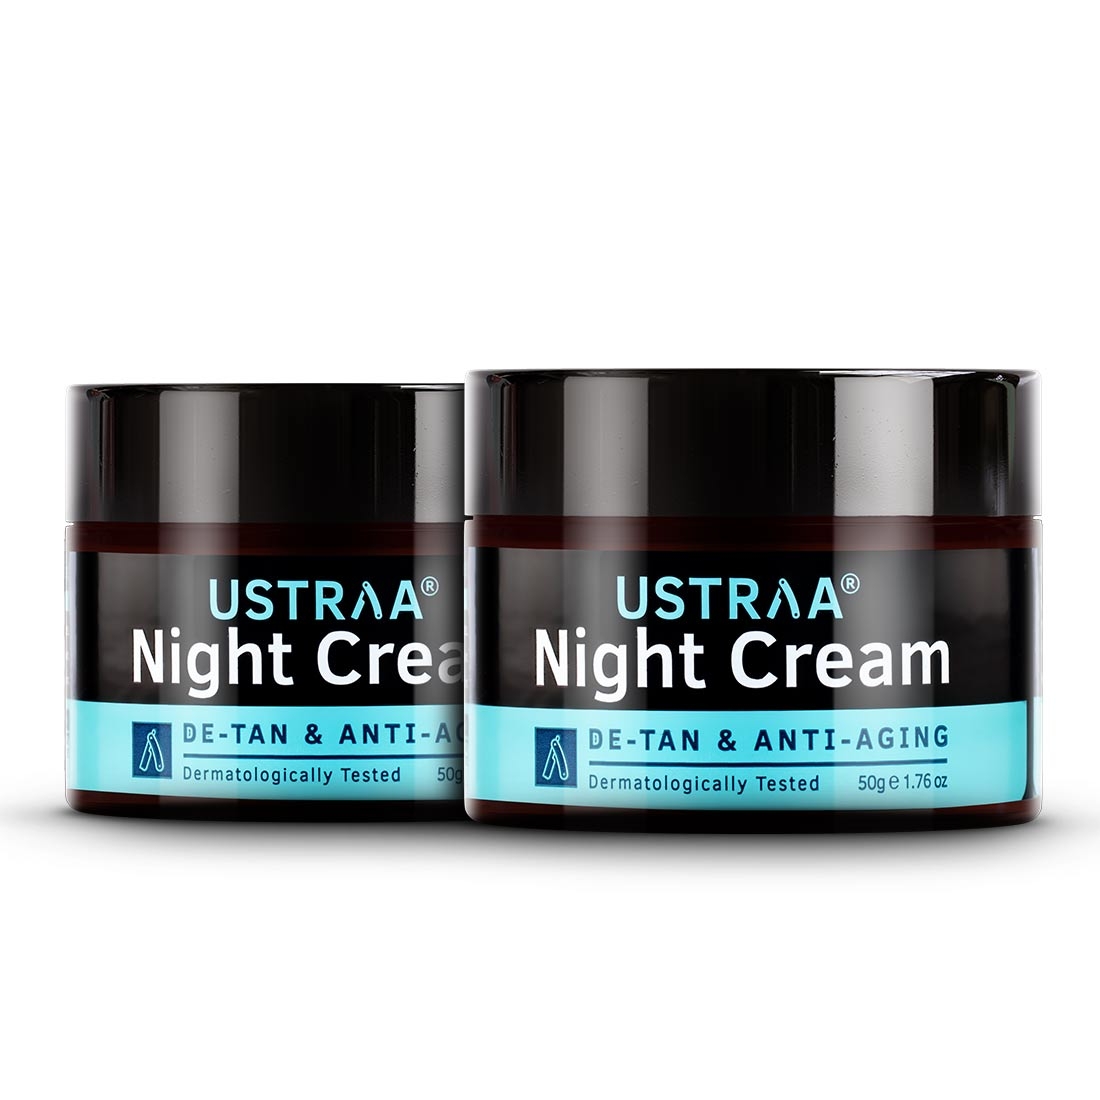 Ustraa Night Cream - 50g - Set Of 2 - De-Tan & Anti-Aging 